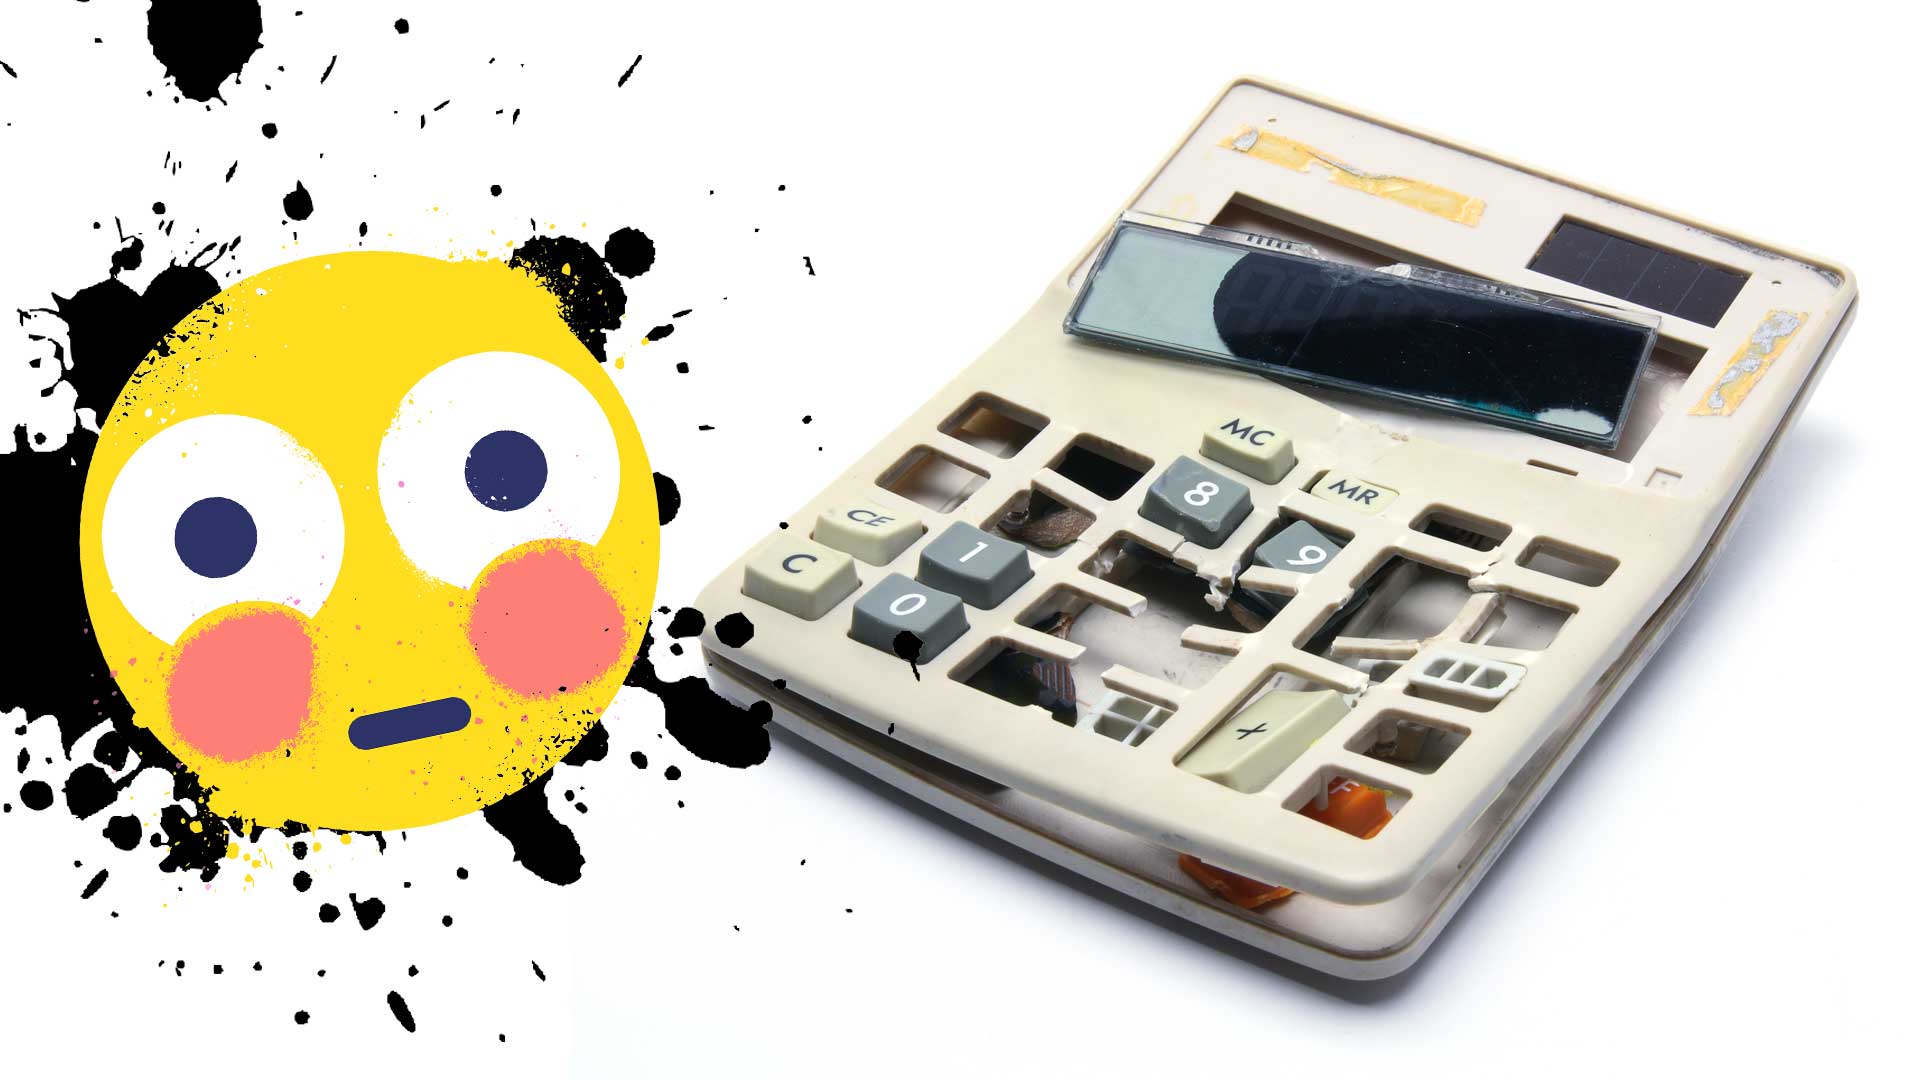 A broken calculator